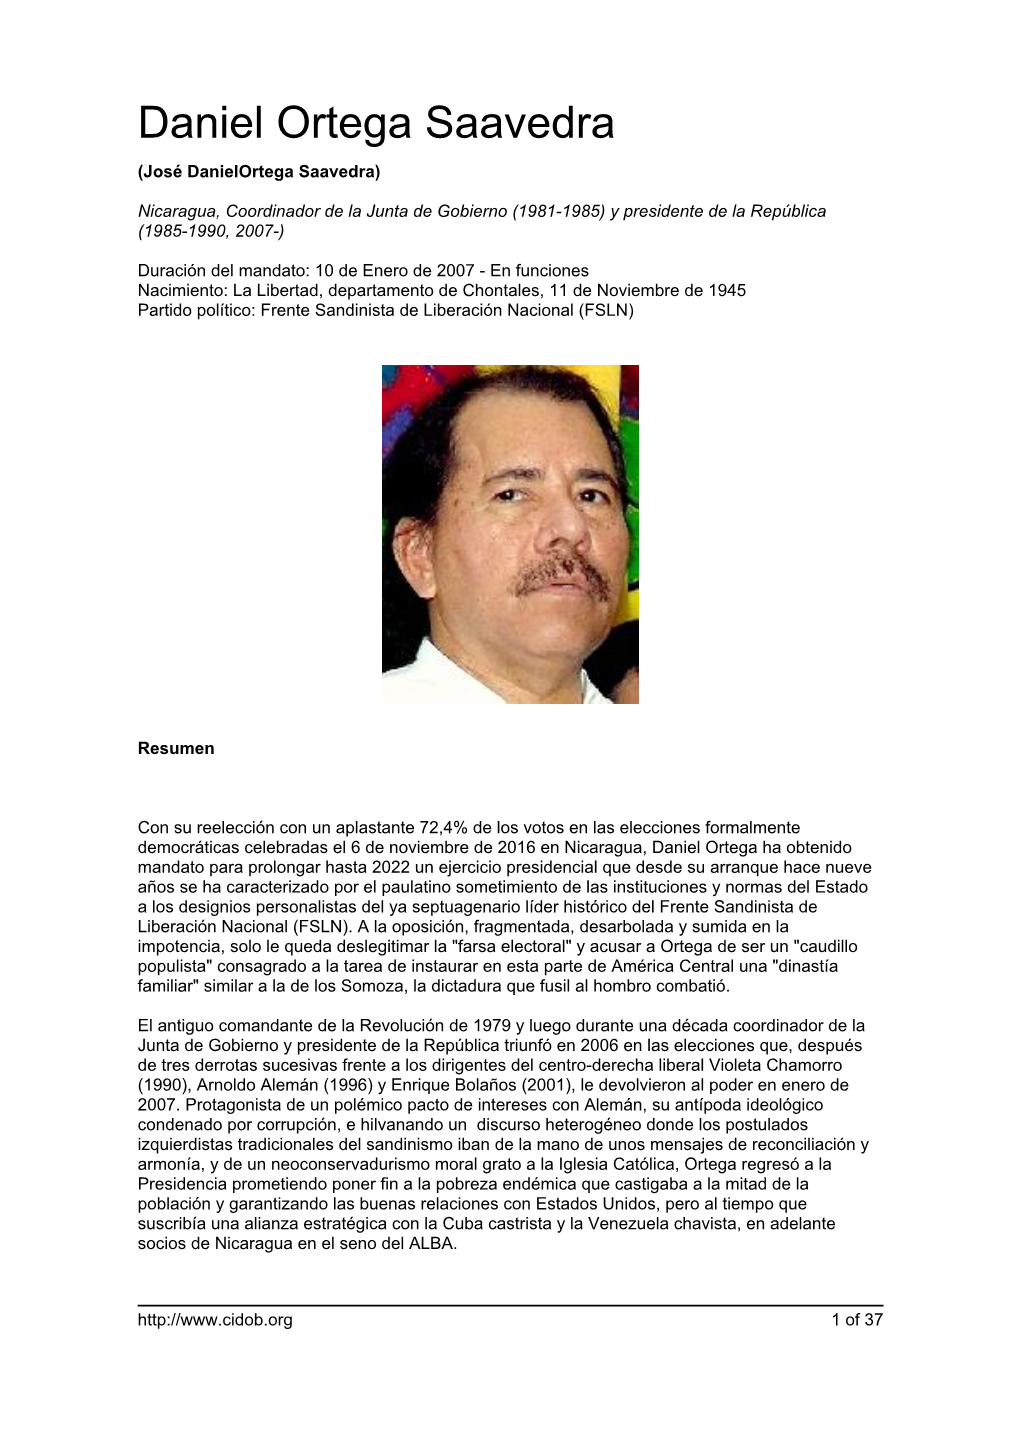 Daniel Ortega Saavedra (José Danielortega Saavedra)